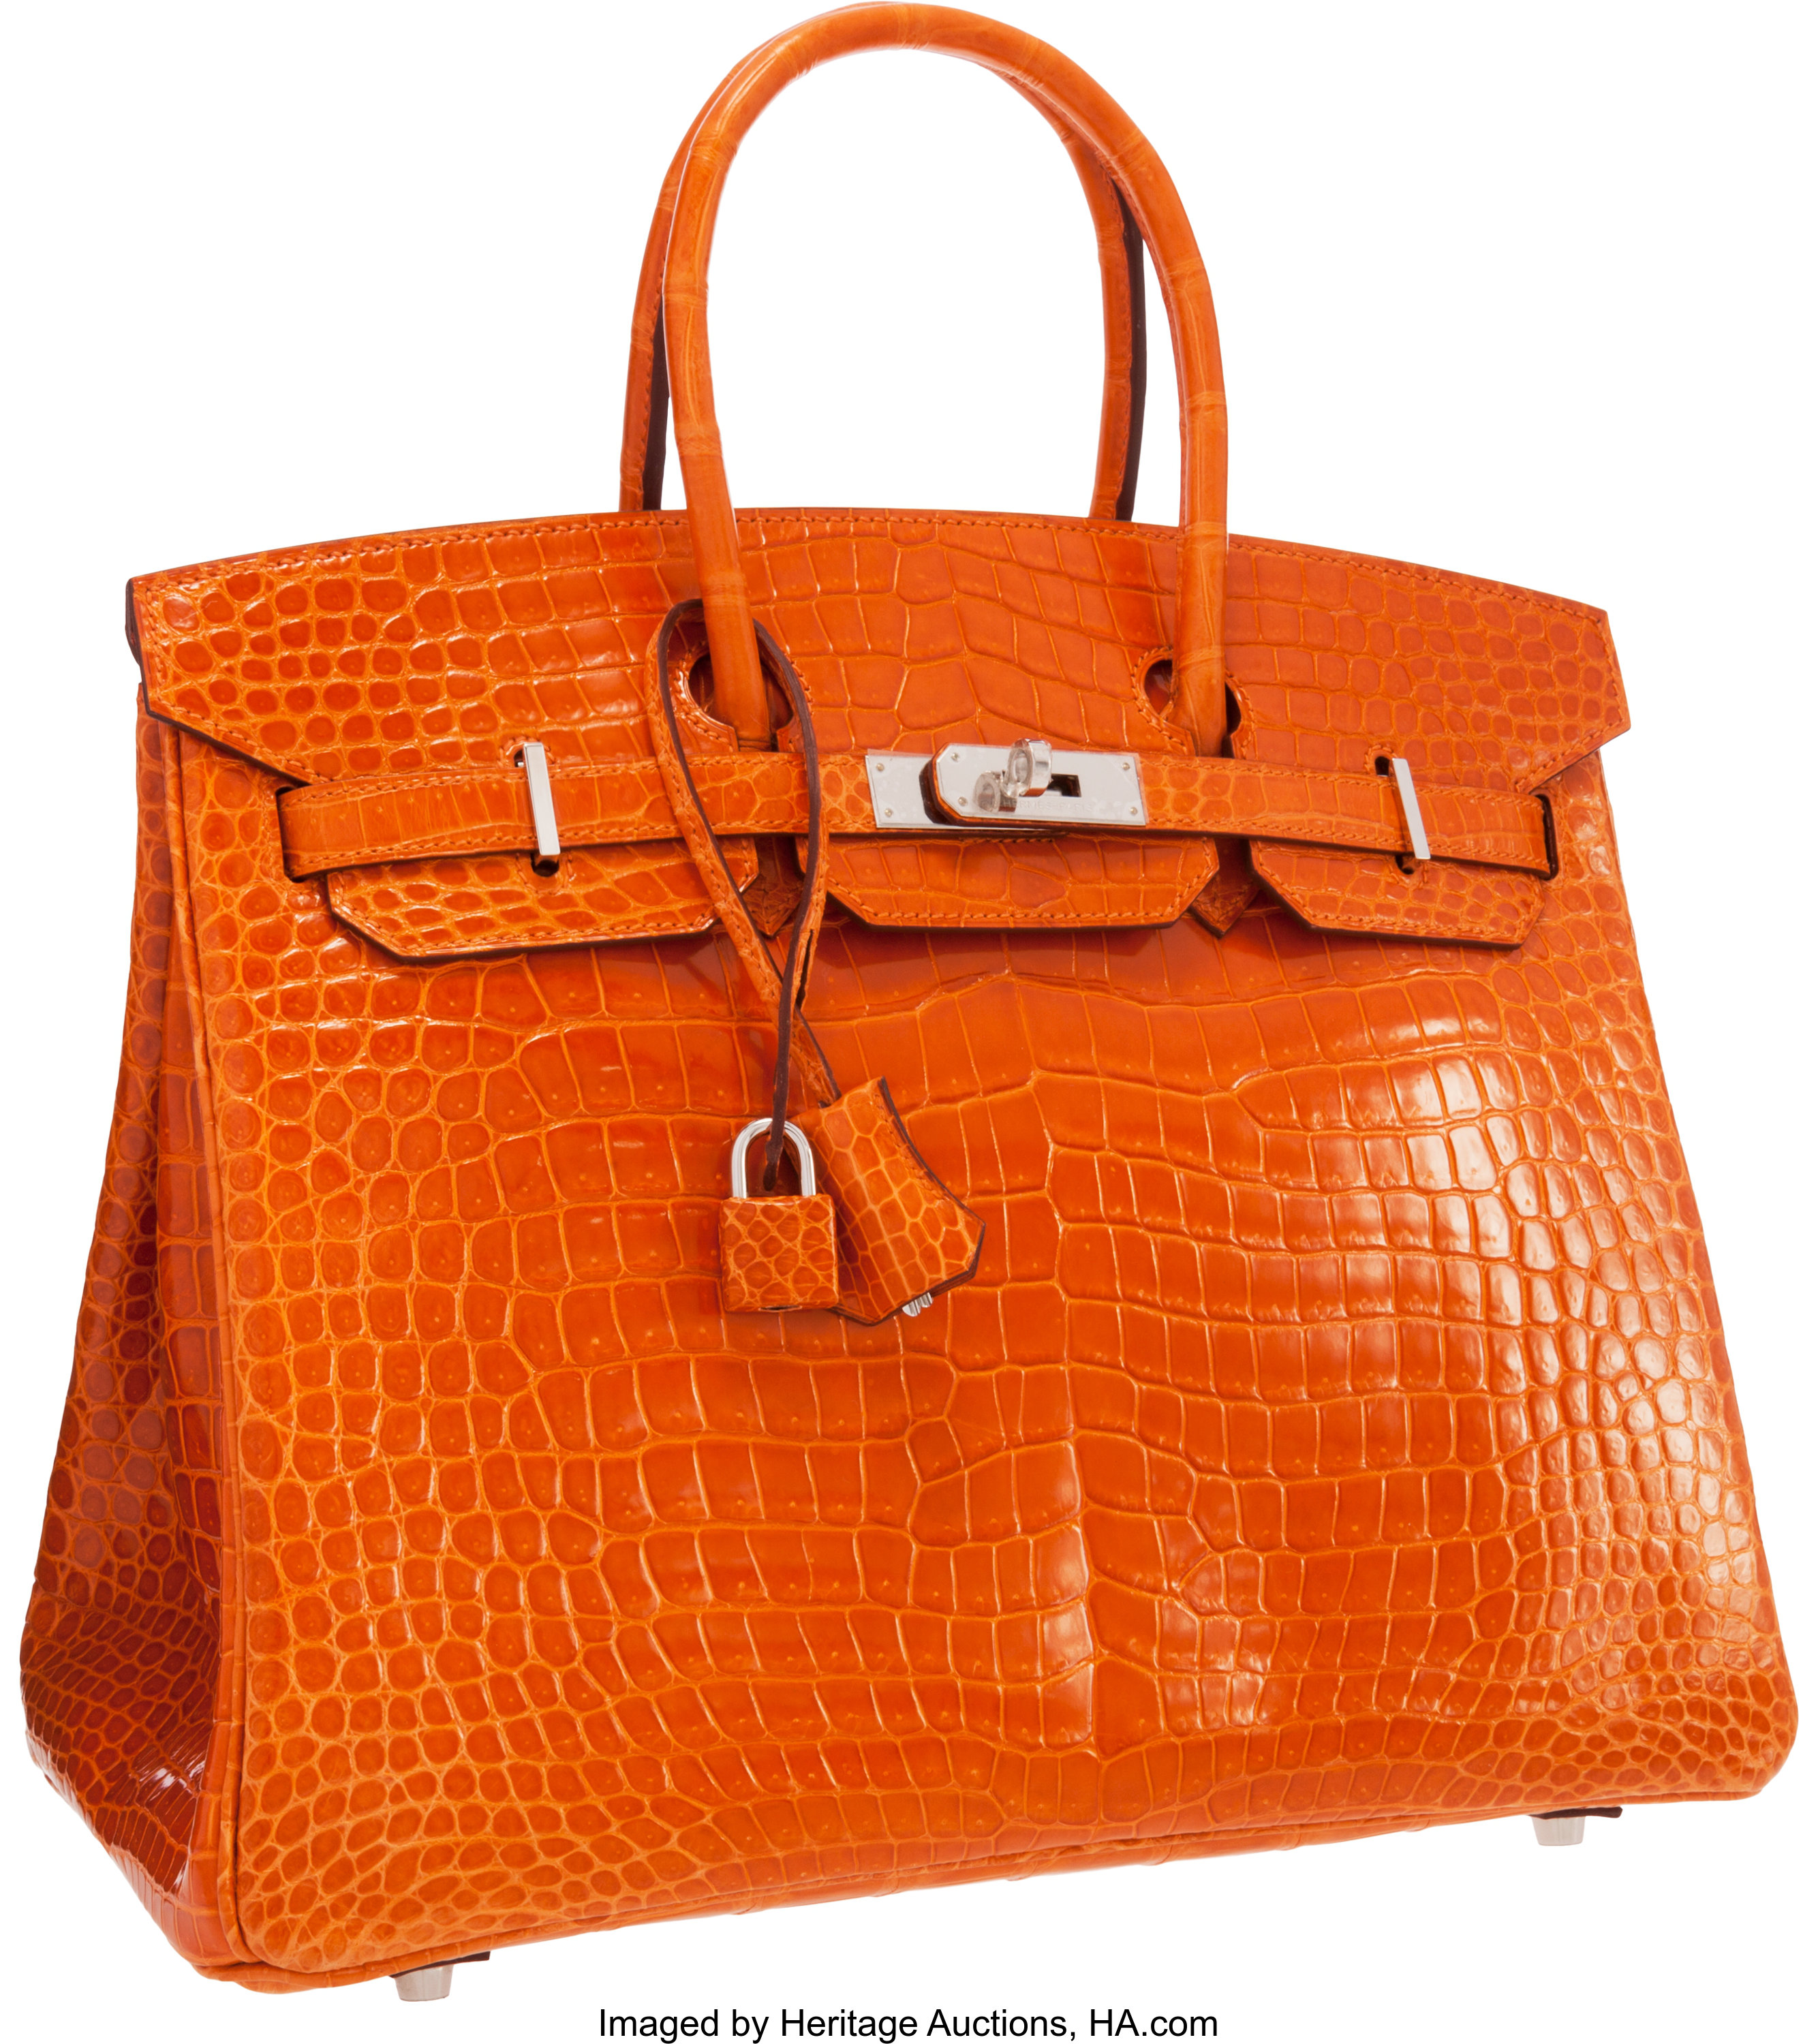 Hermes 35cm Shiny Orange H Porosus Crocodile Birkin Bag with